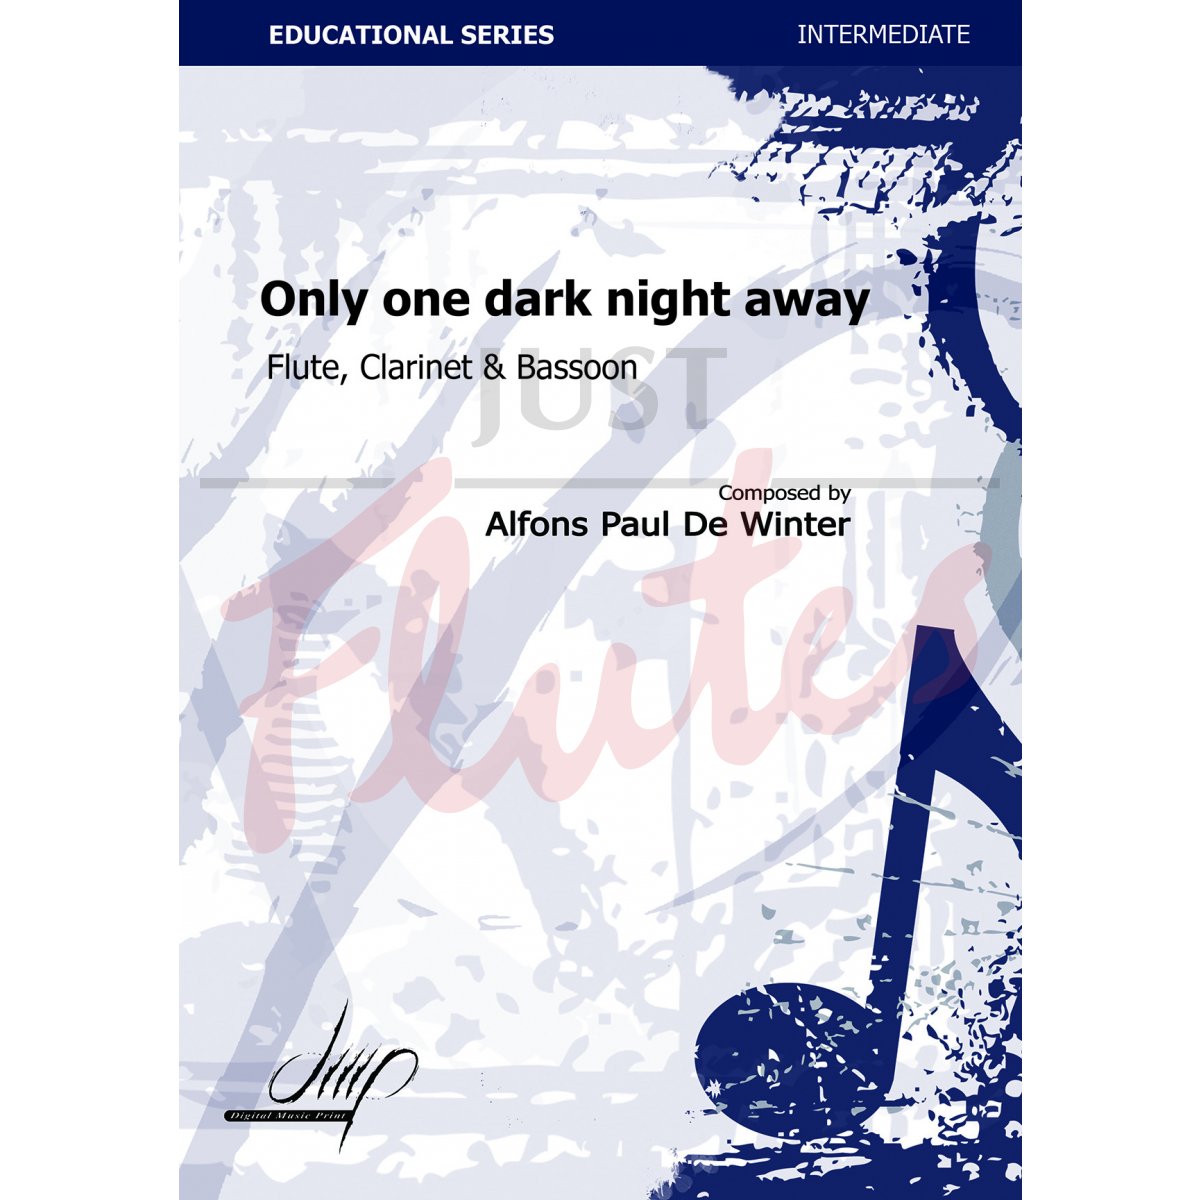 Only one dark night away